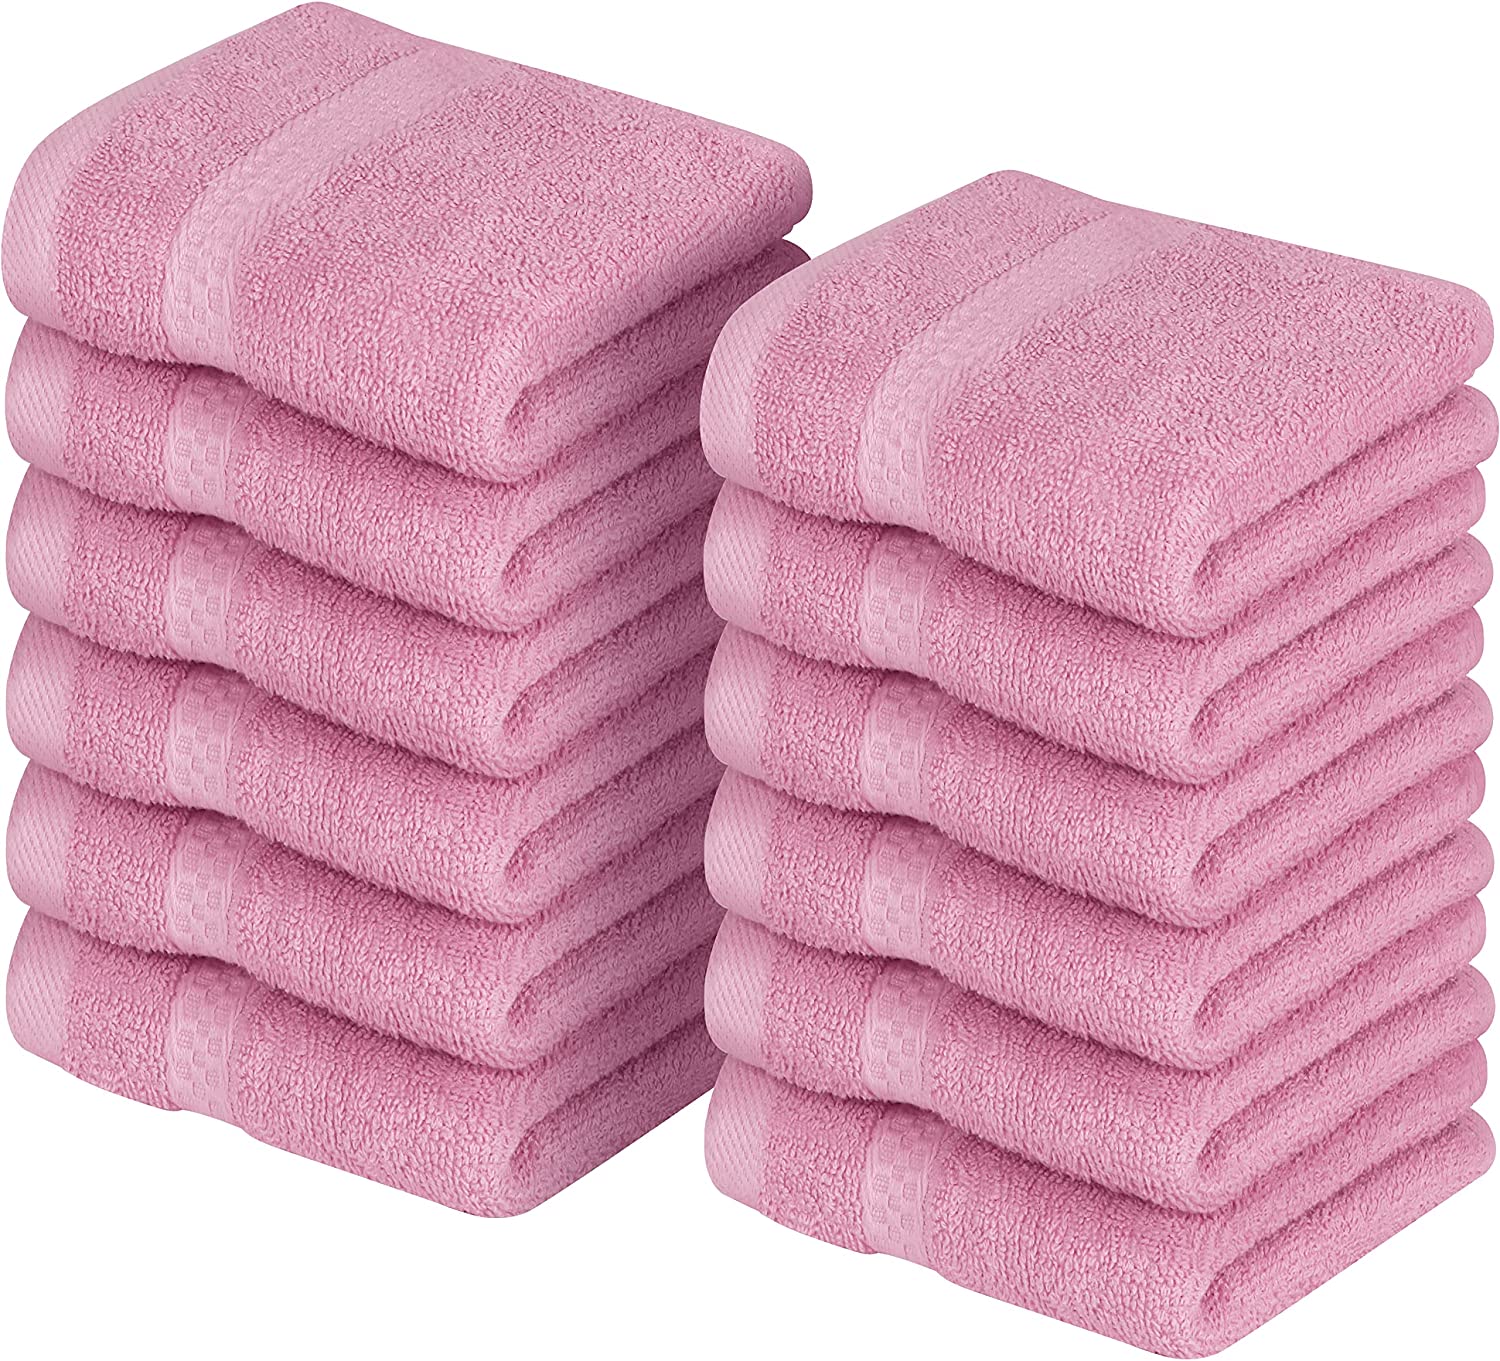 Utopia Towels 12 Pack Premium Wash Cloths Set (12 x 12 Inches) 100